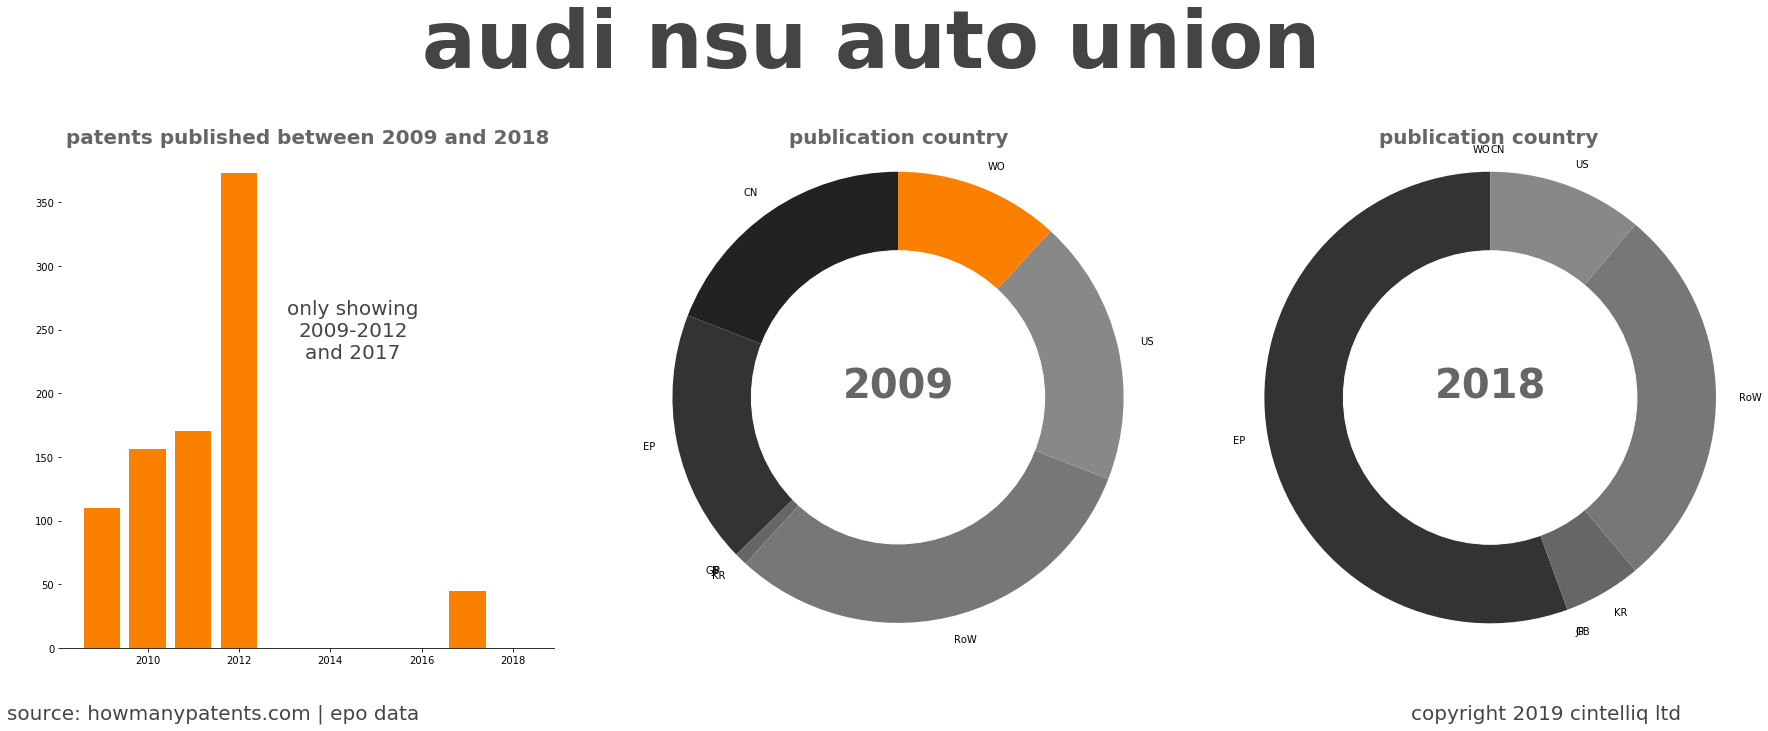 summary of patents for Audi Nsu Auto Union